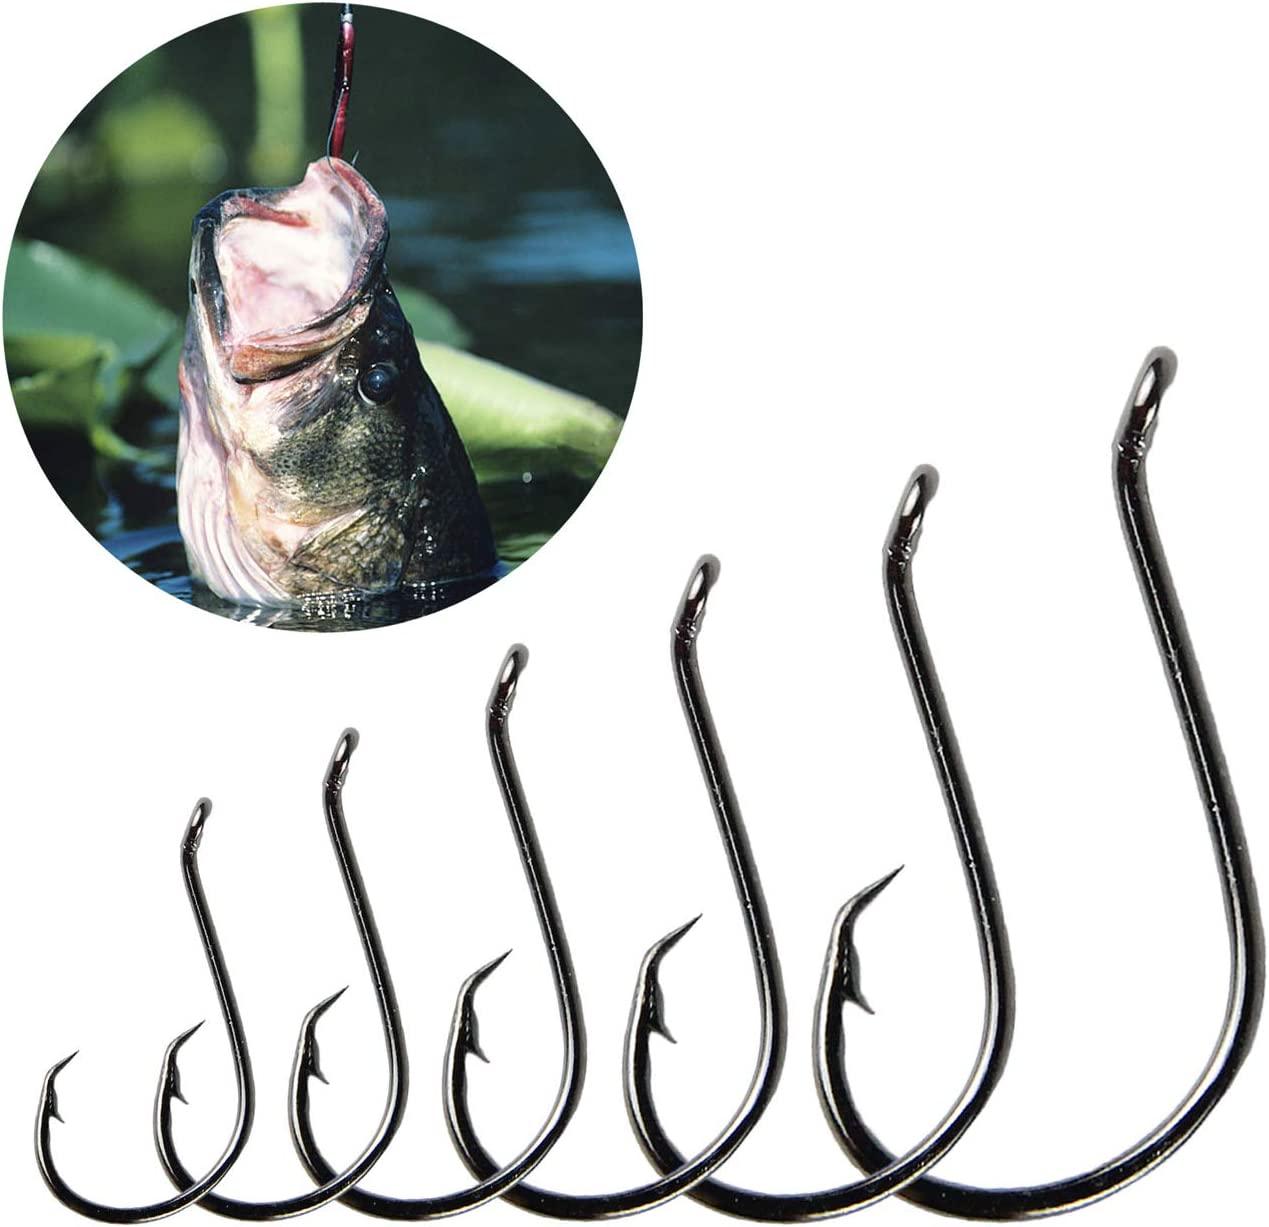 Generic 120 Large Fishing Hooks Saltwater And Catfish Hooks Ortment - Fishing Hook Saltwater Hooks Â€“ Catfishing Hooks Circle